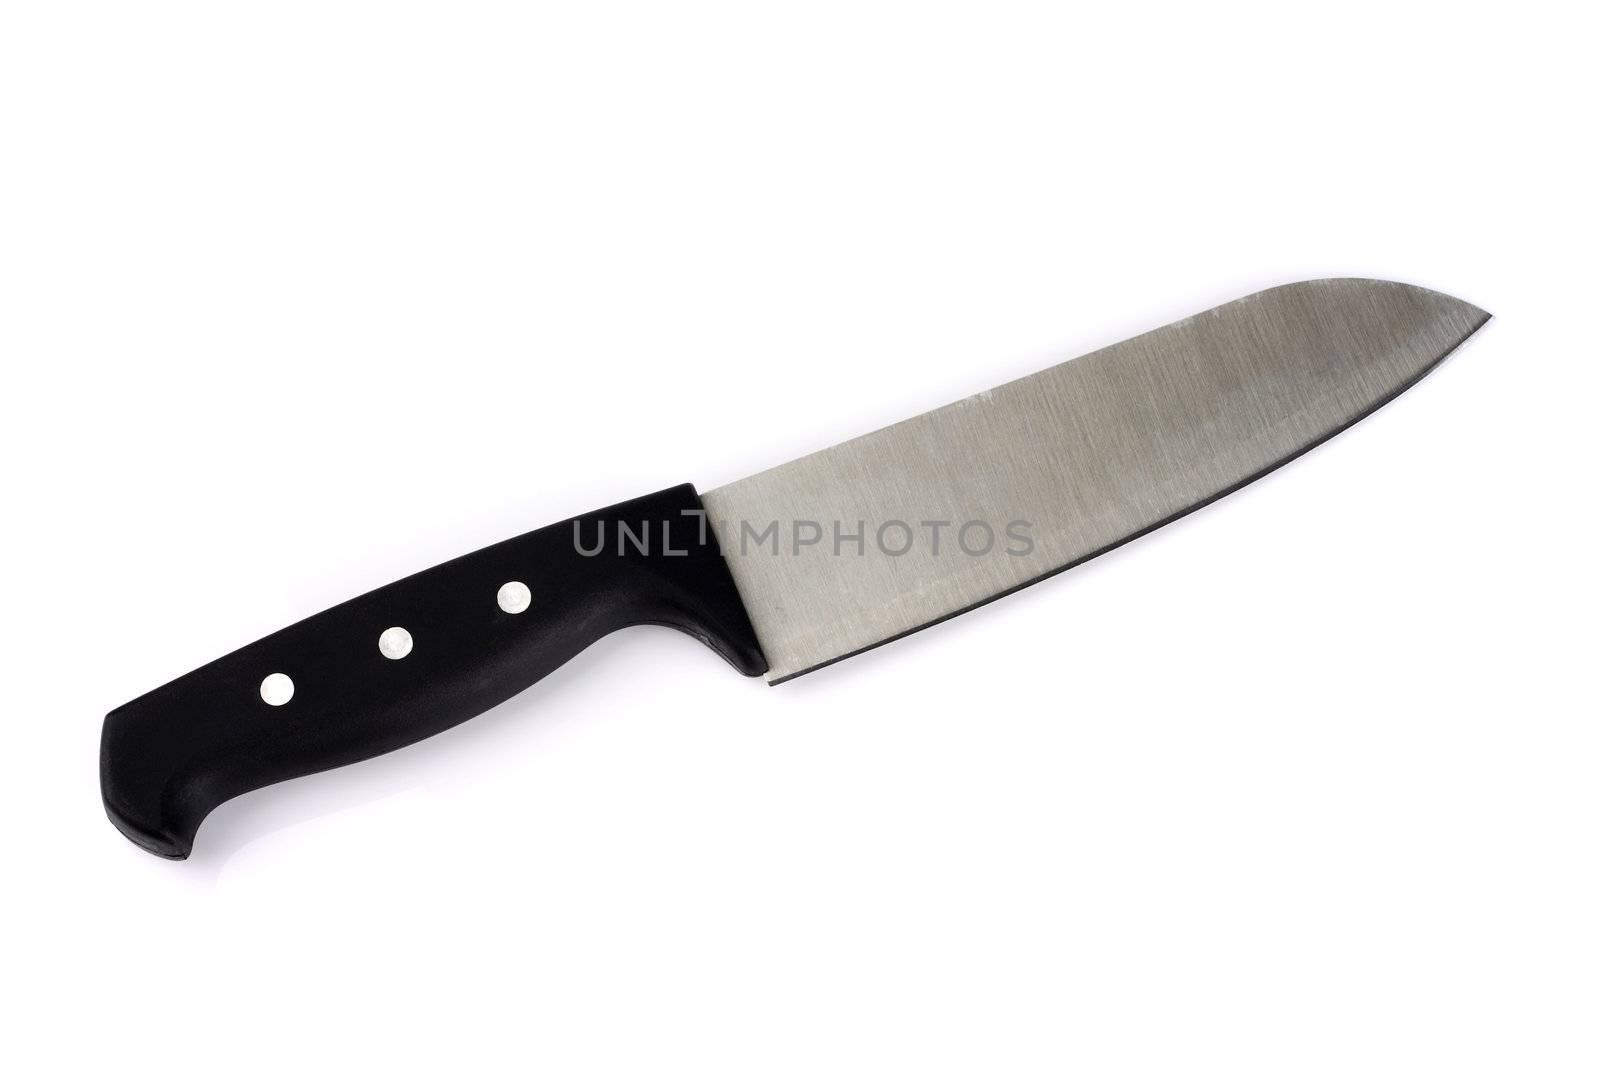 Kitchen knife isolated on white